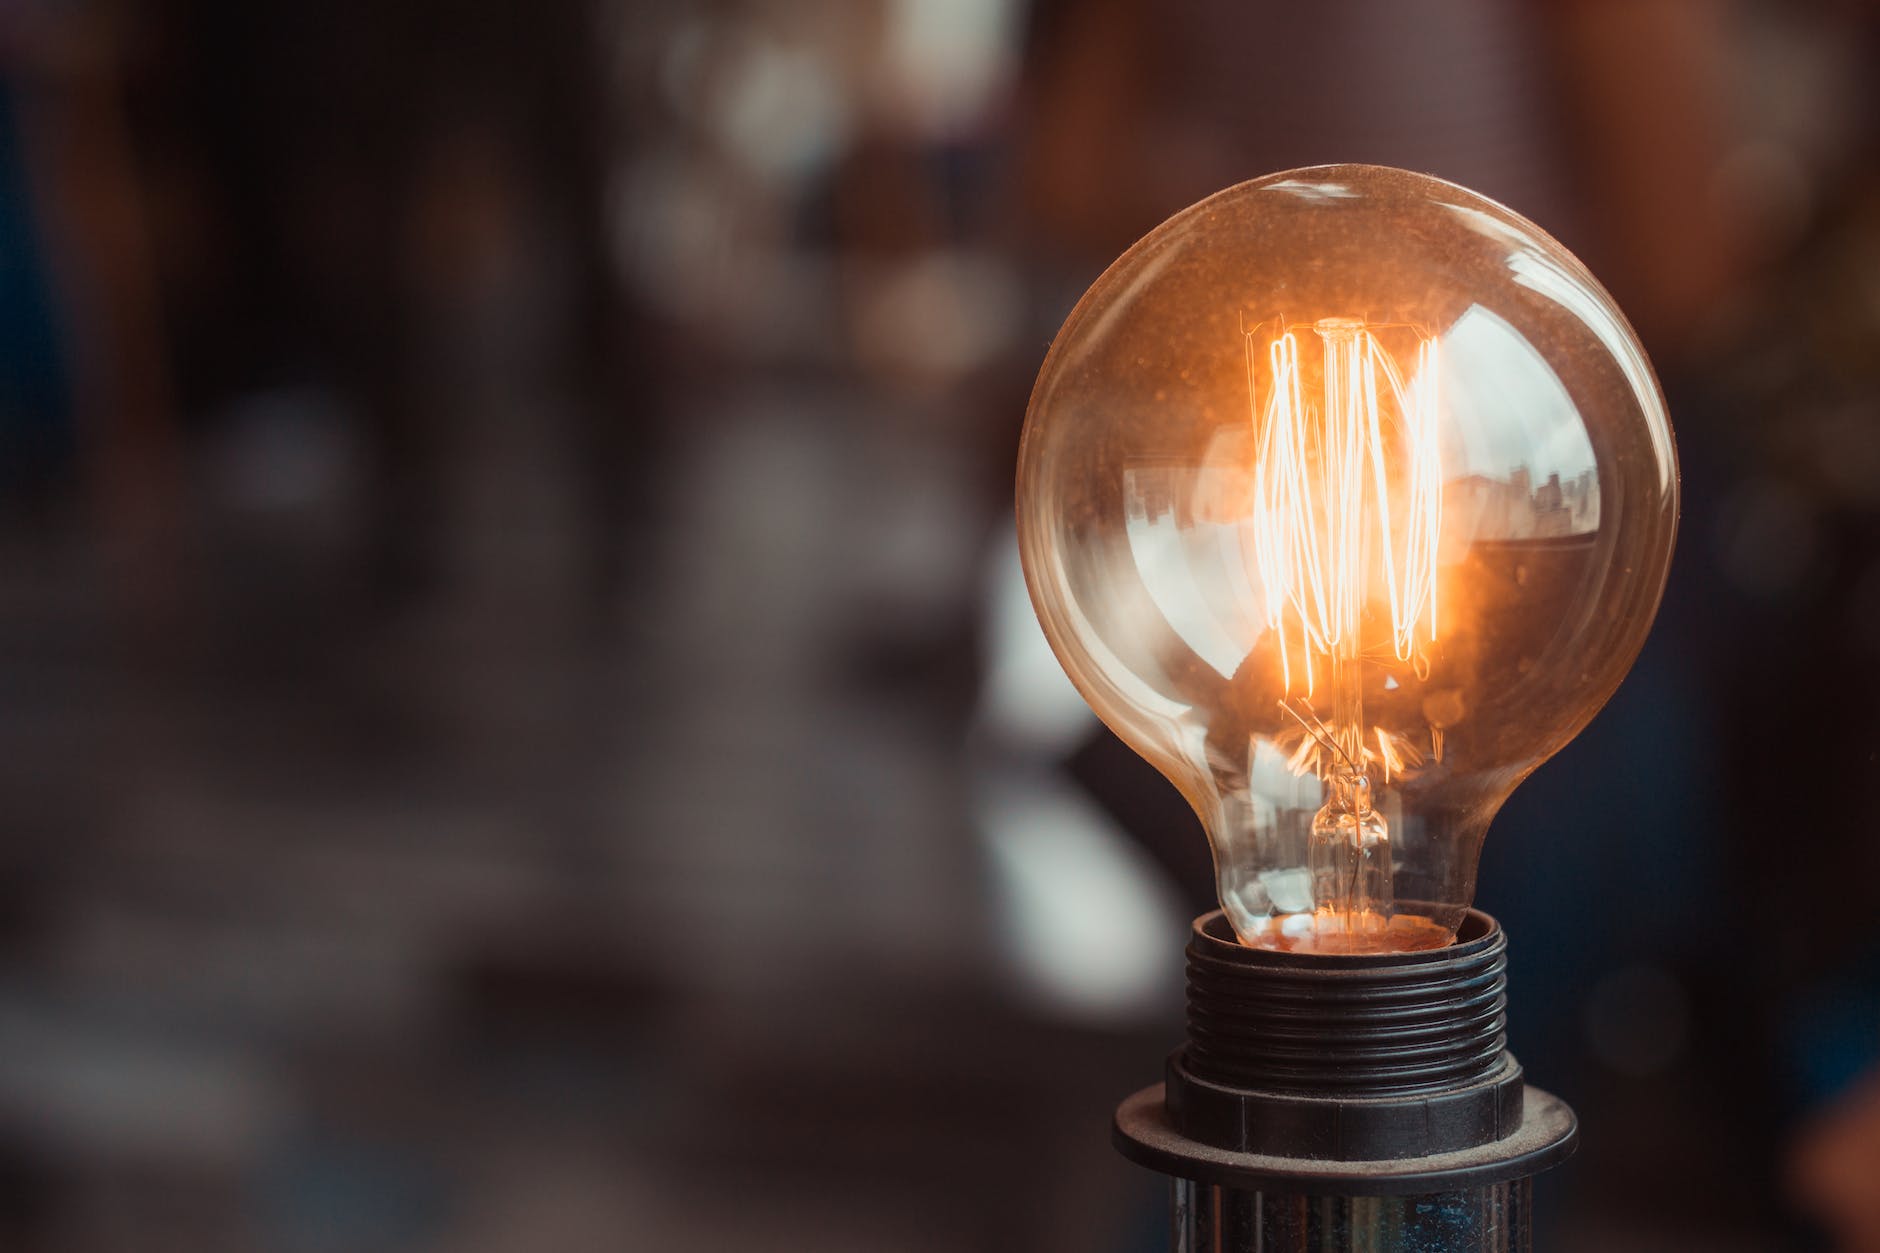 Top Ten: Highest Rated LED Light Bulbs on Amazon